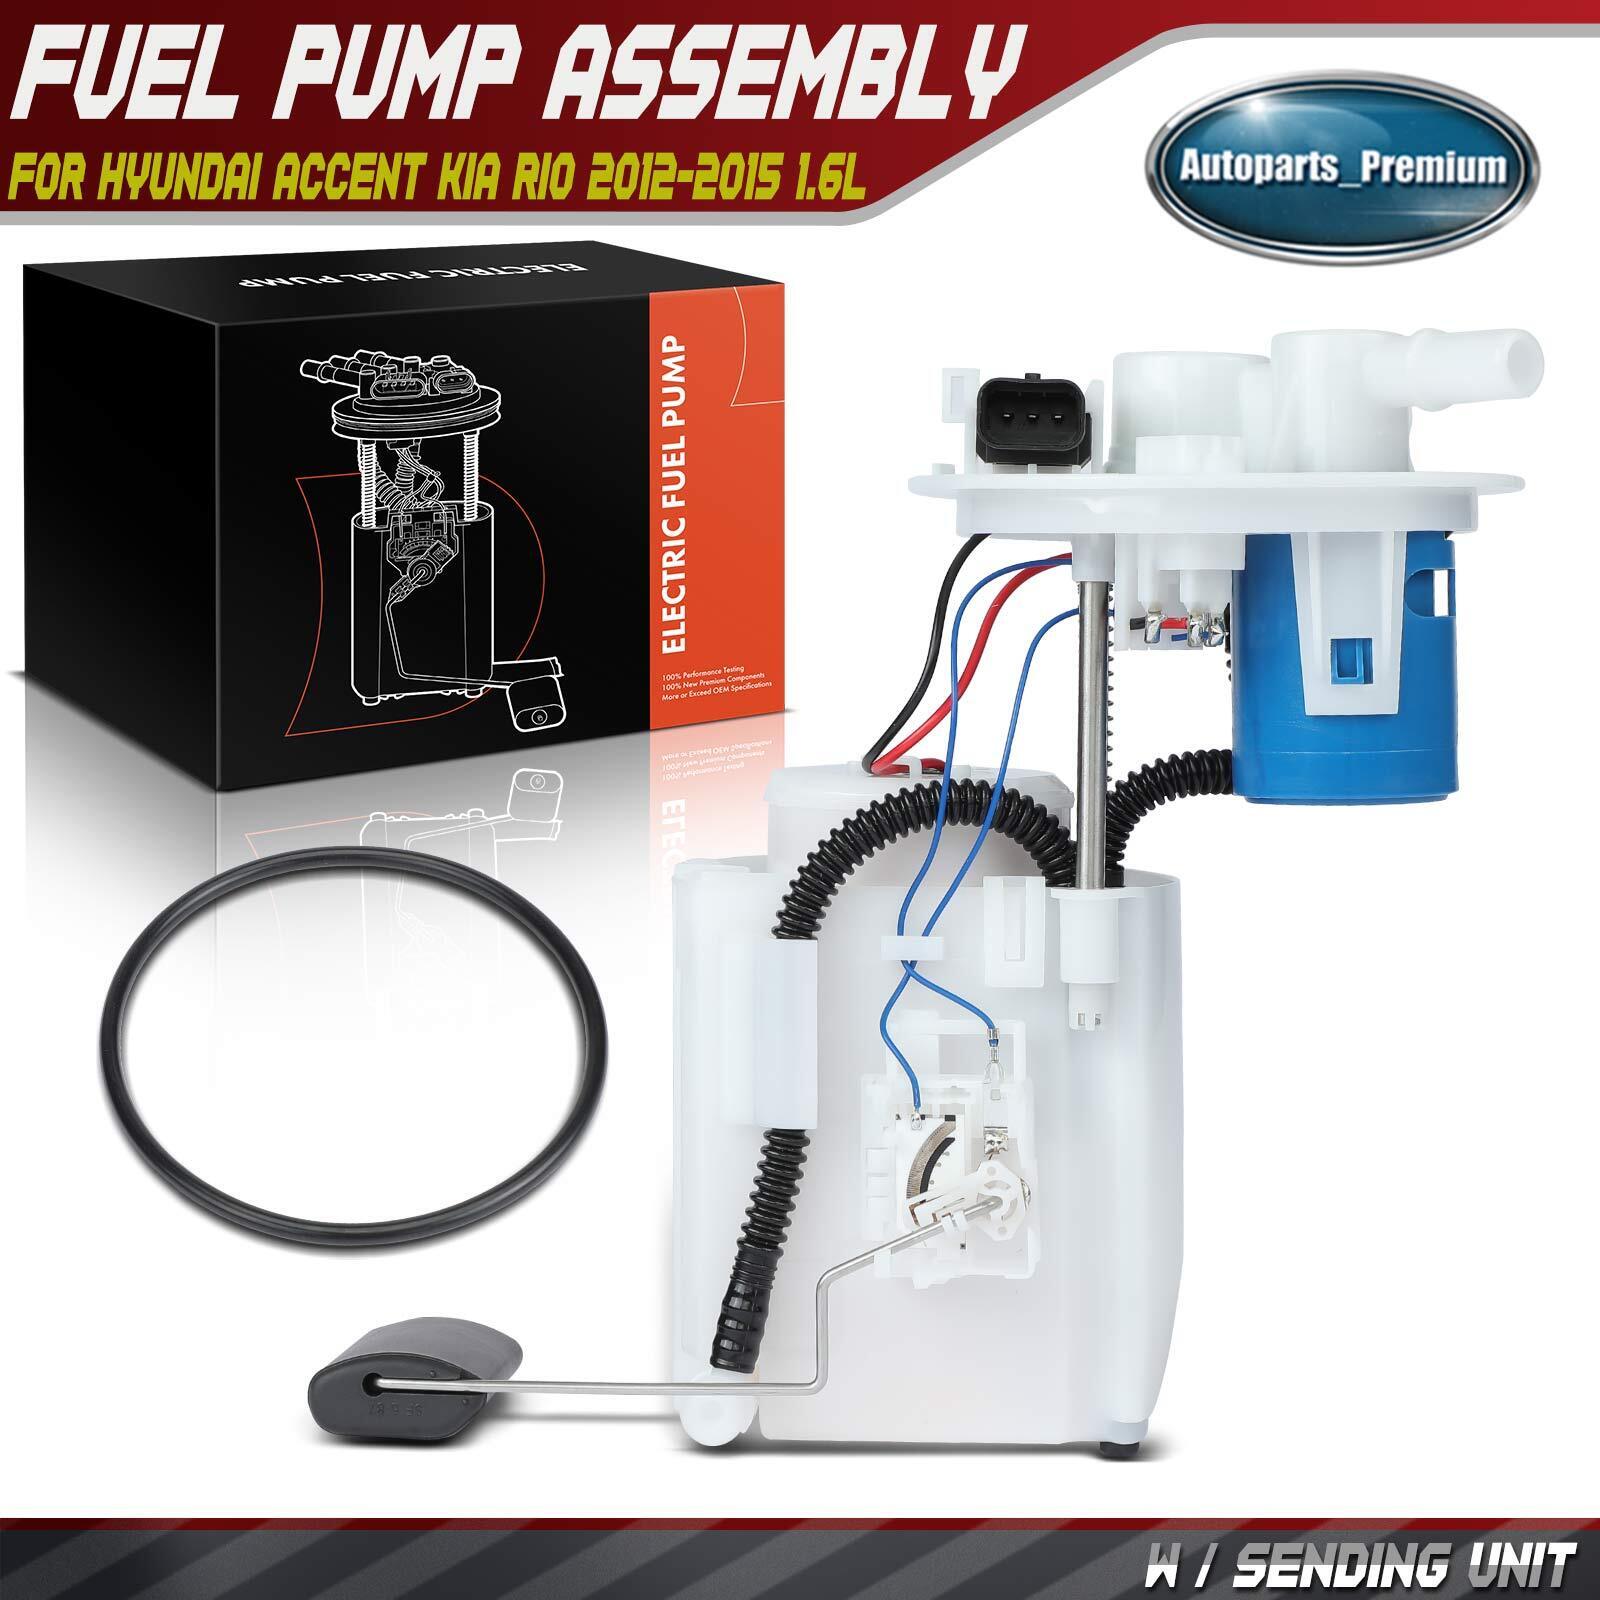 Electric Fuel Pump Assembly w/ Sensor for Hyundai Accent Kia Rio 2012-2015 1.6L